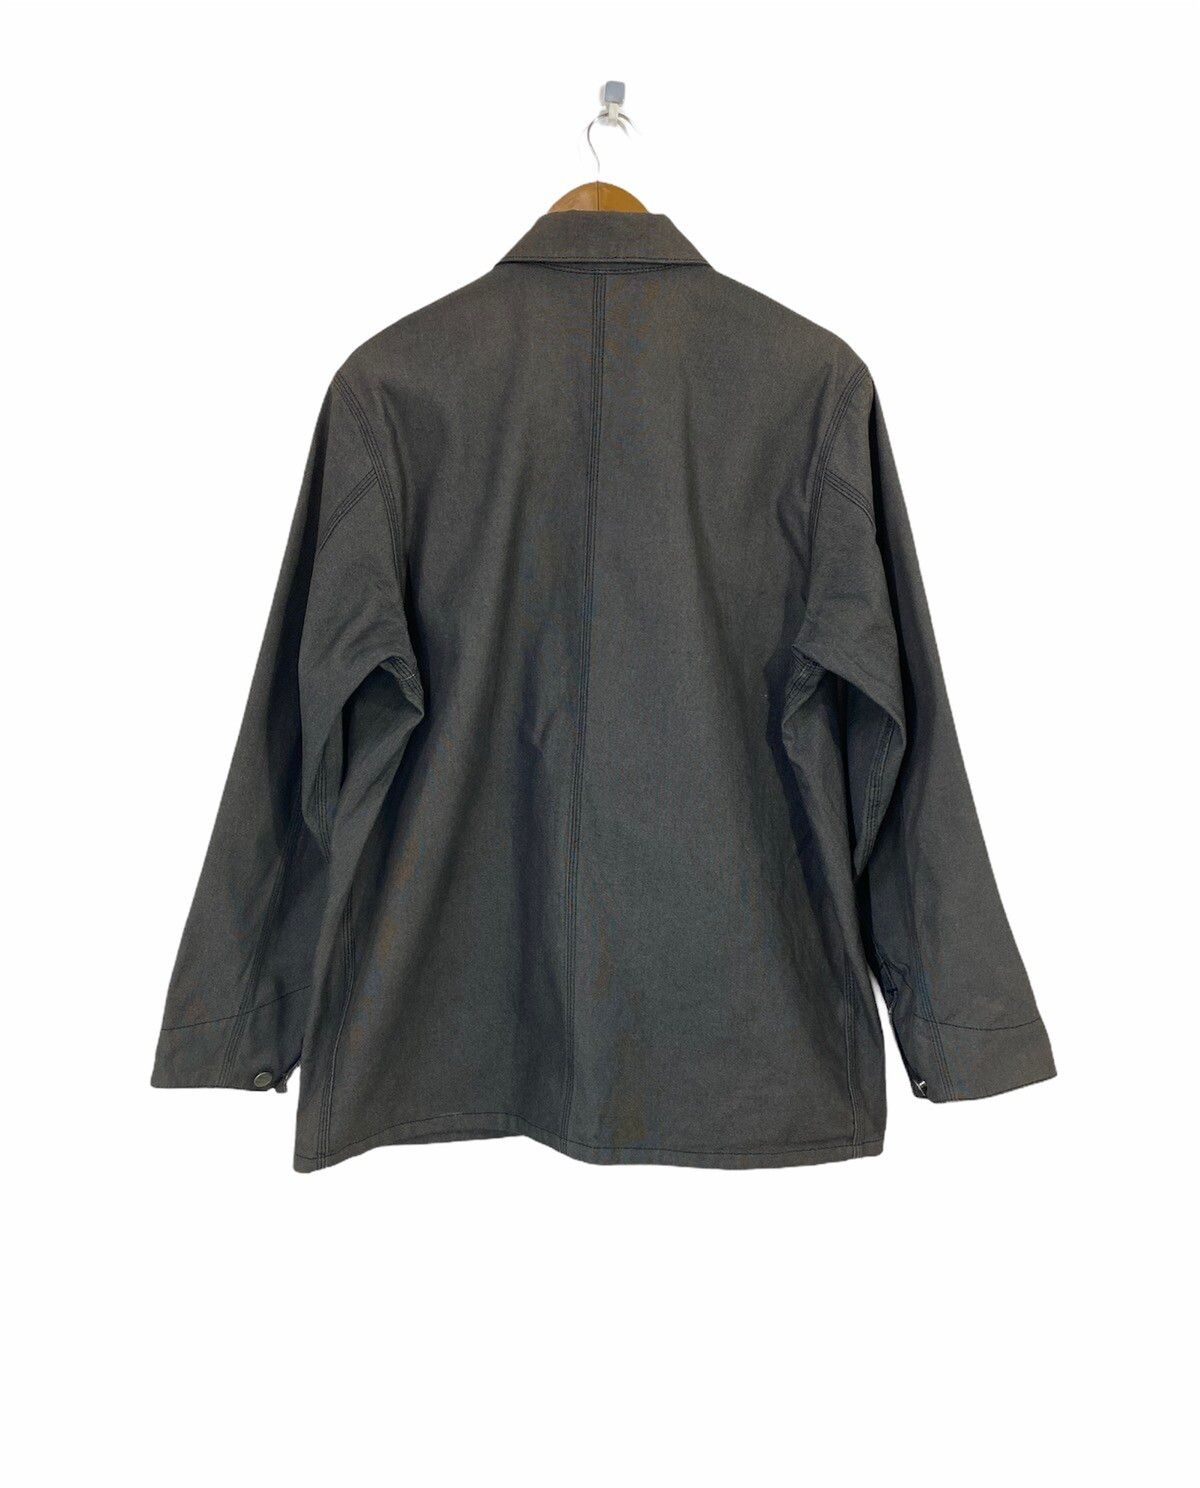 Carhartt Chore Jacket 4 Pocket Design Rare Design - 2